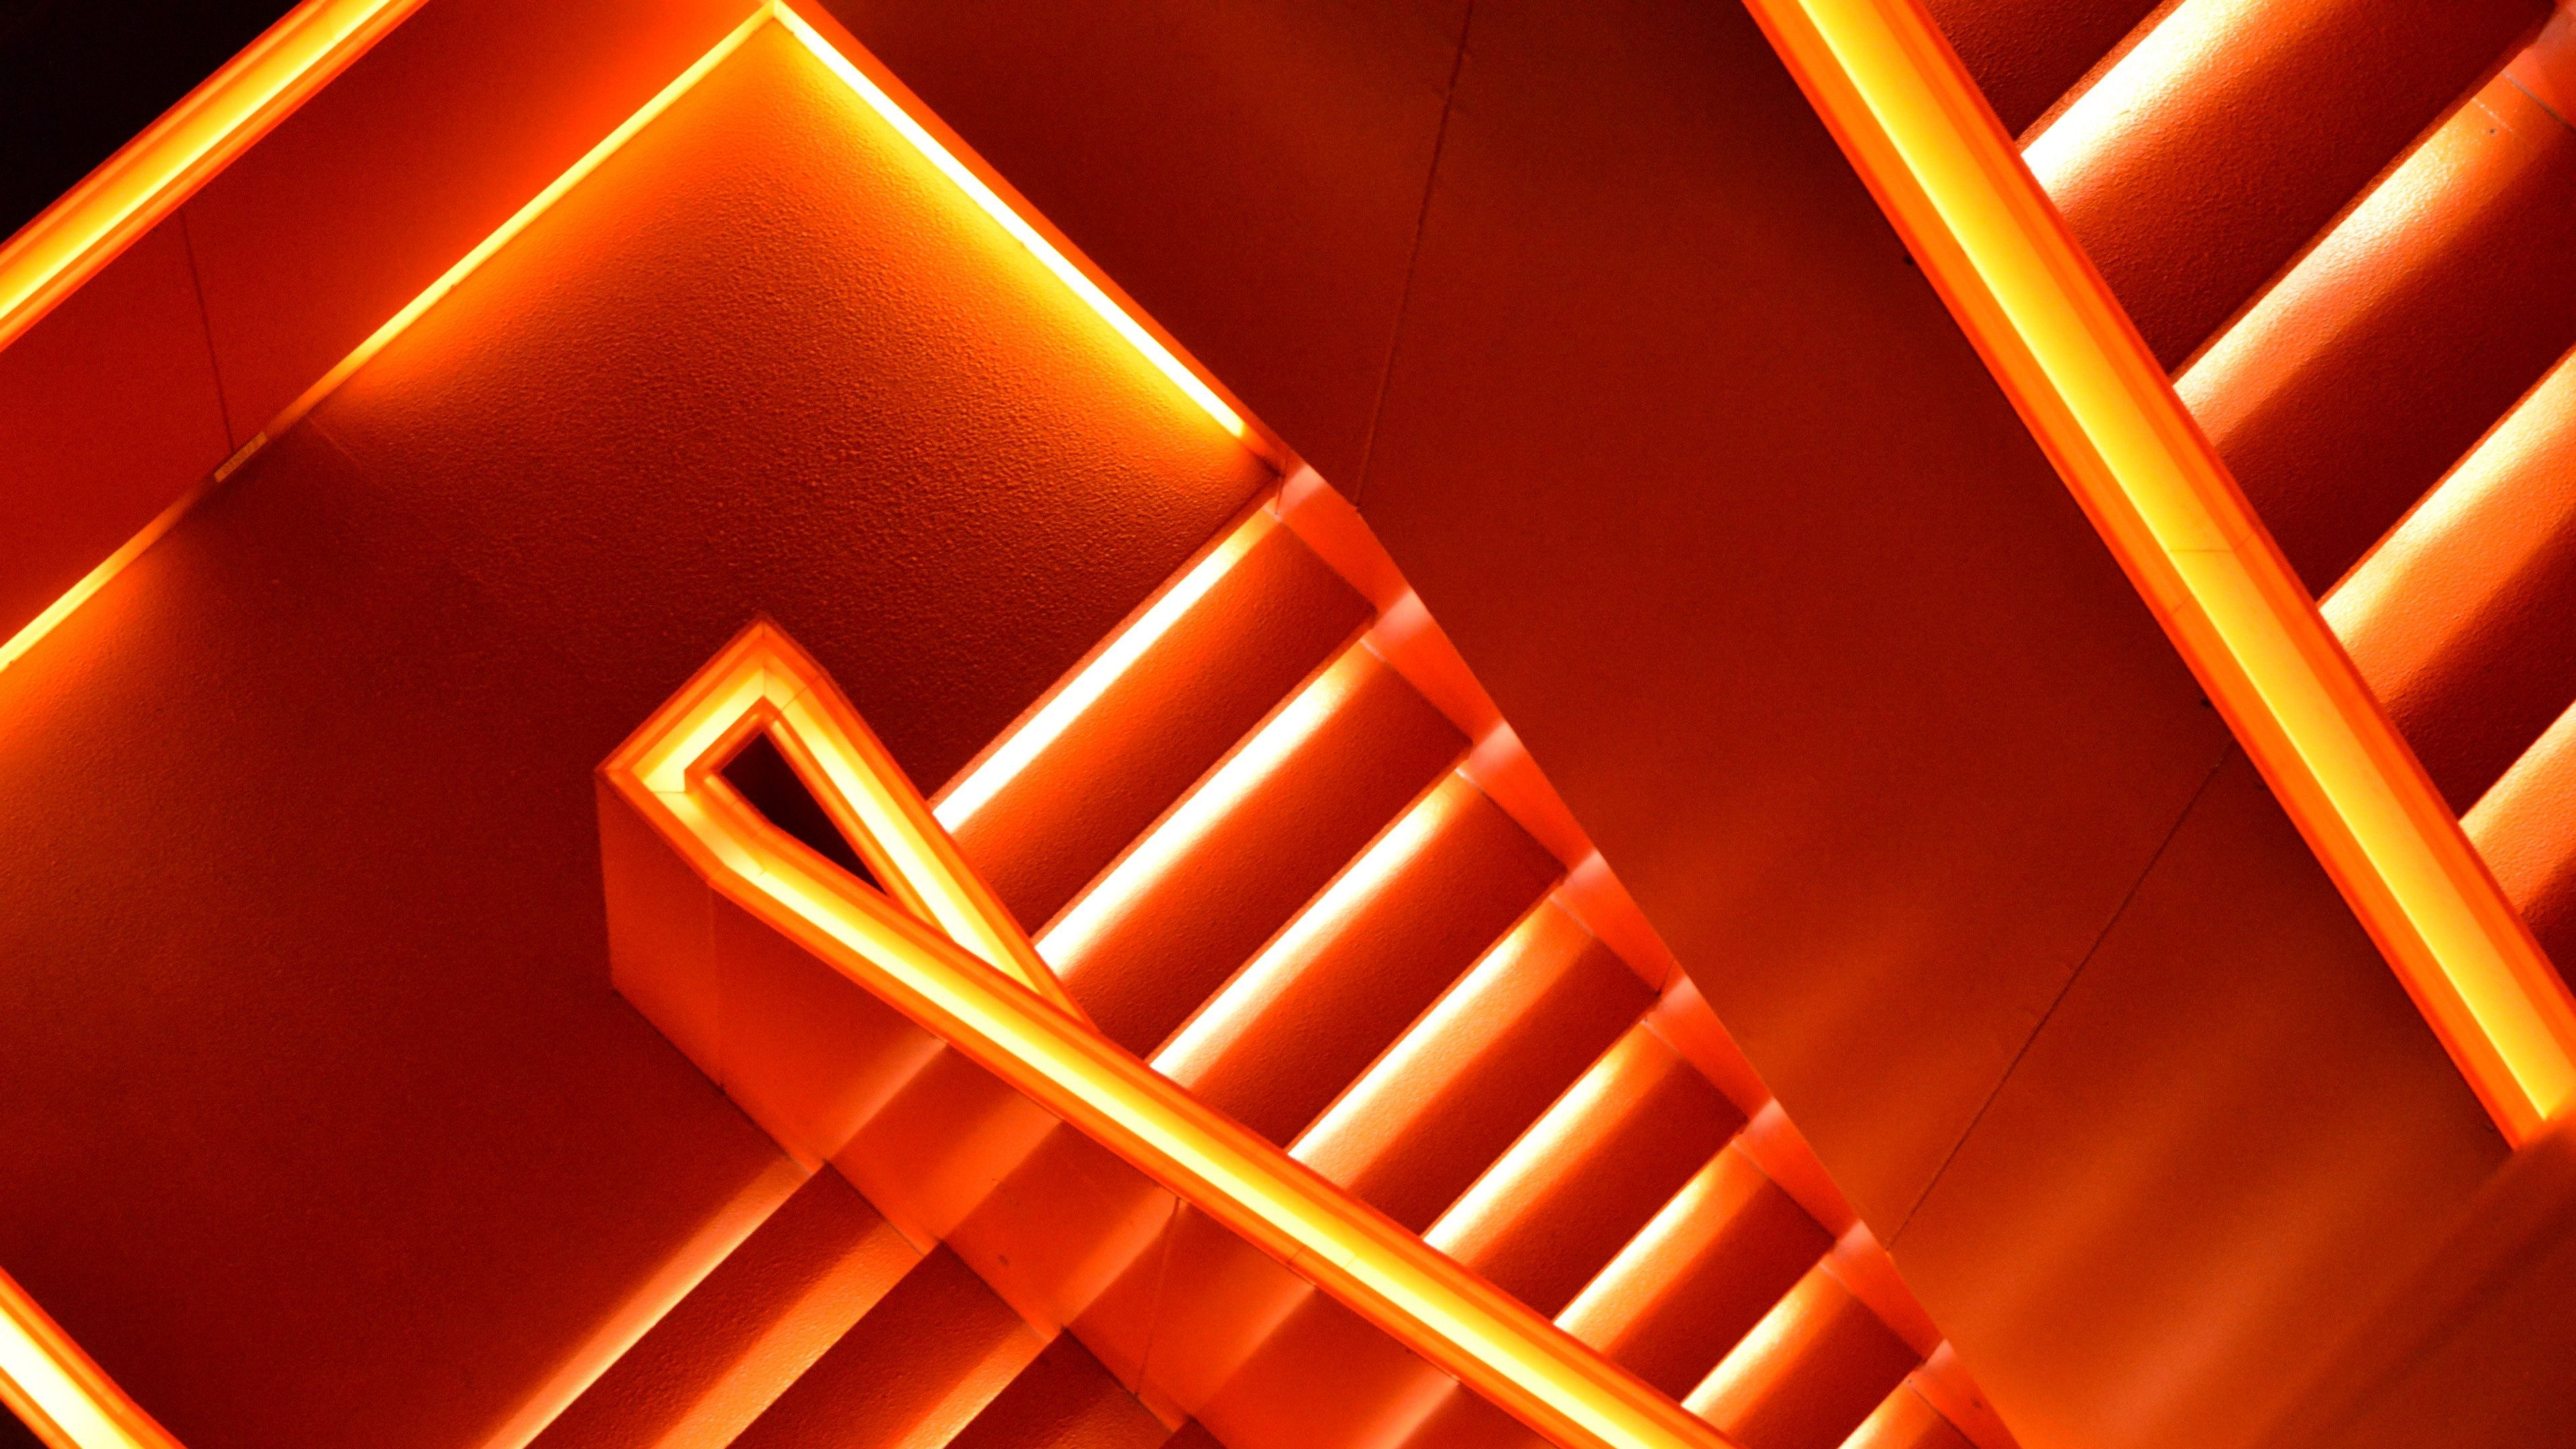 Wallpaper / a stairway illuminated by bright orange neons, lighting stairs 4k wallpaper free download